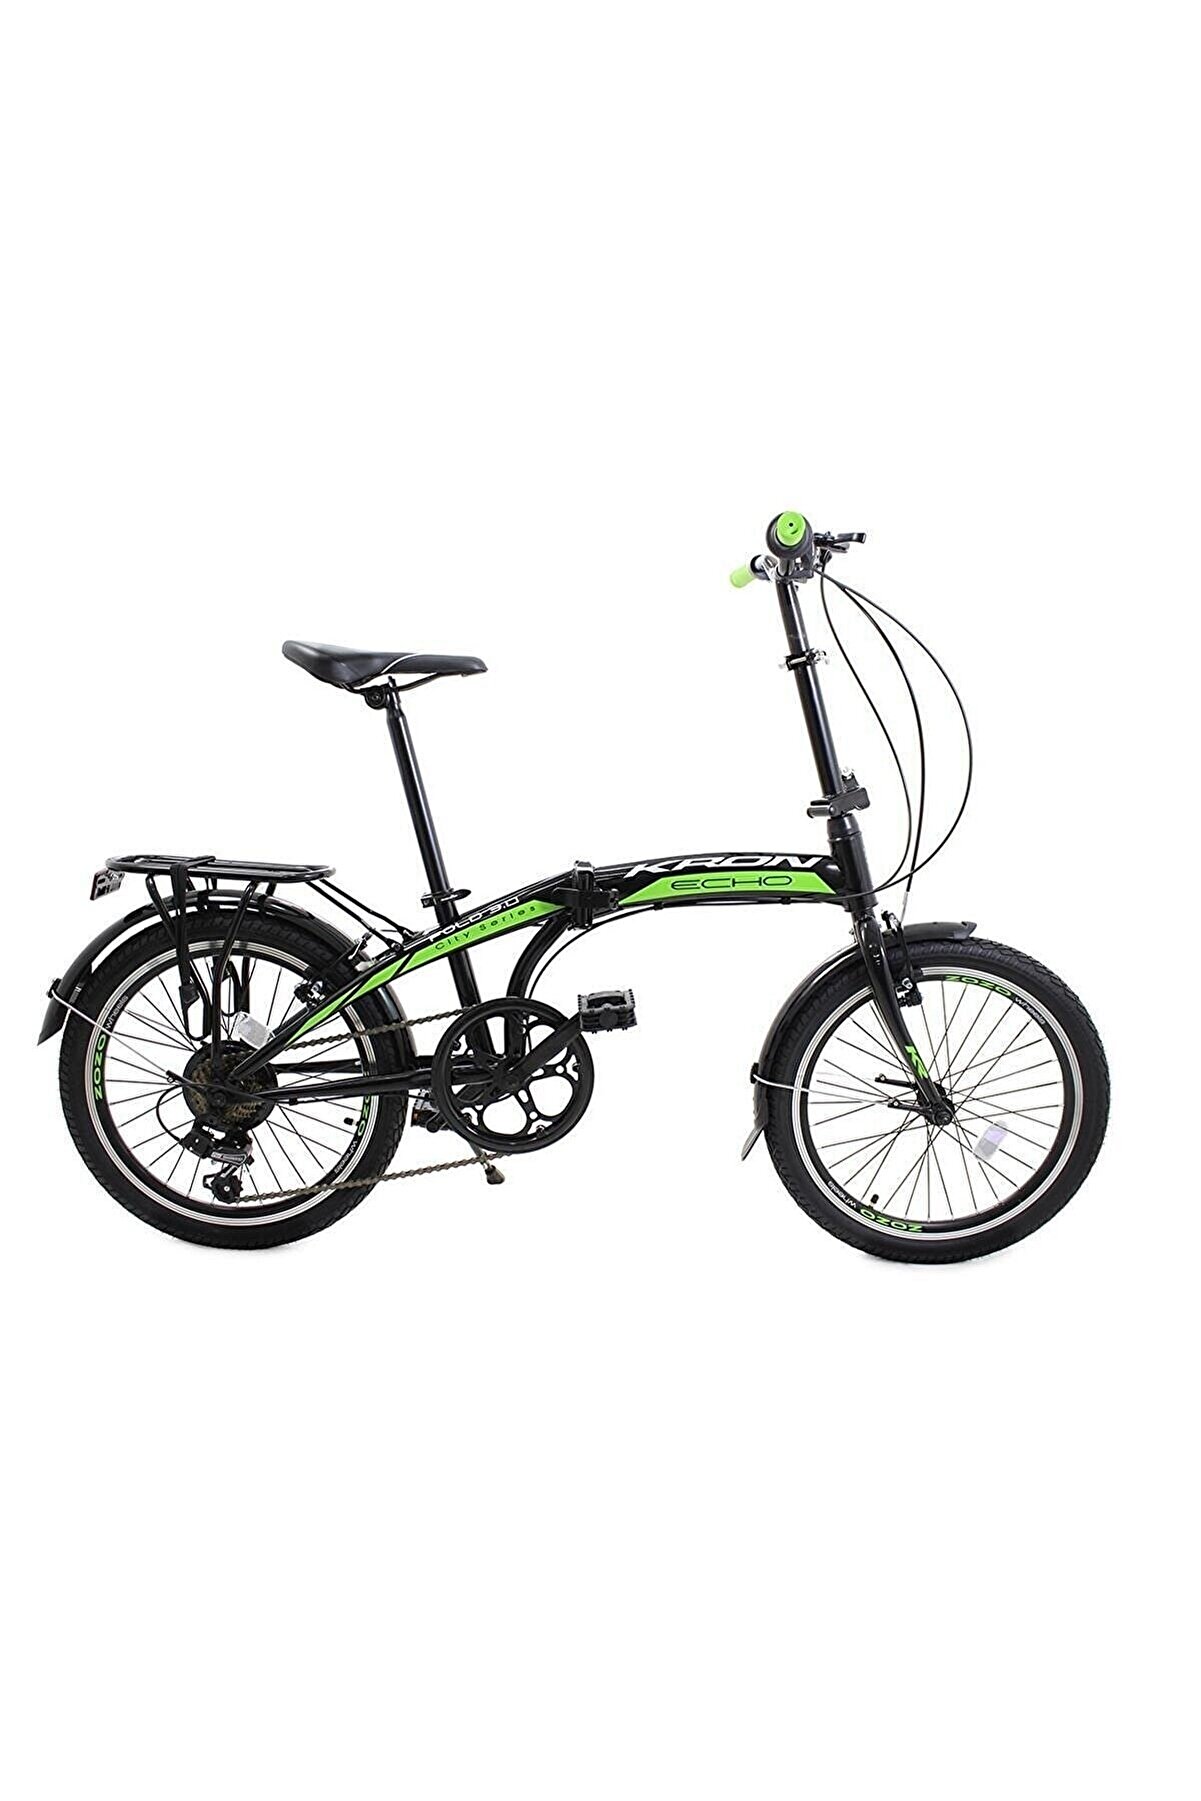 Kron Fold 3.0 20 Jant Katlanır Bisiklet Siyah Yeşil Fold 3.0